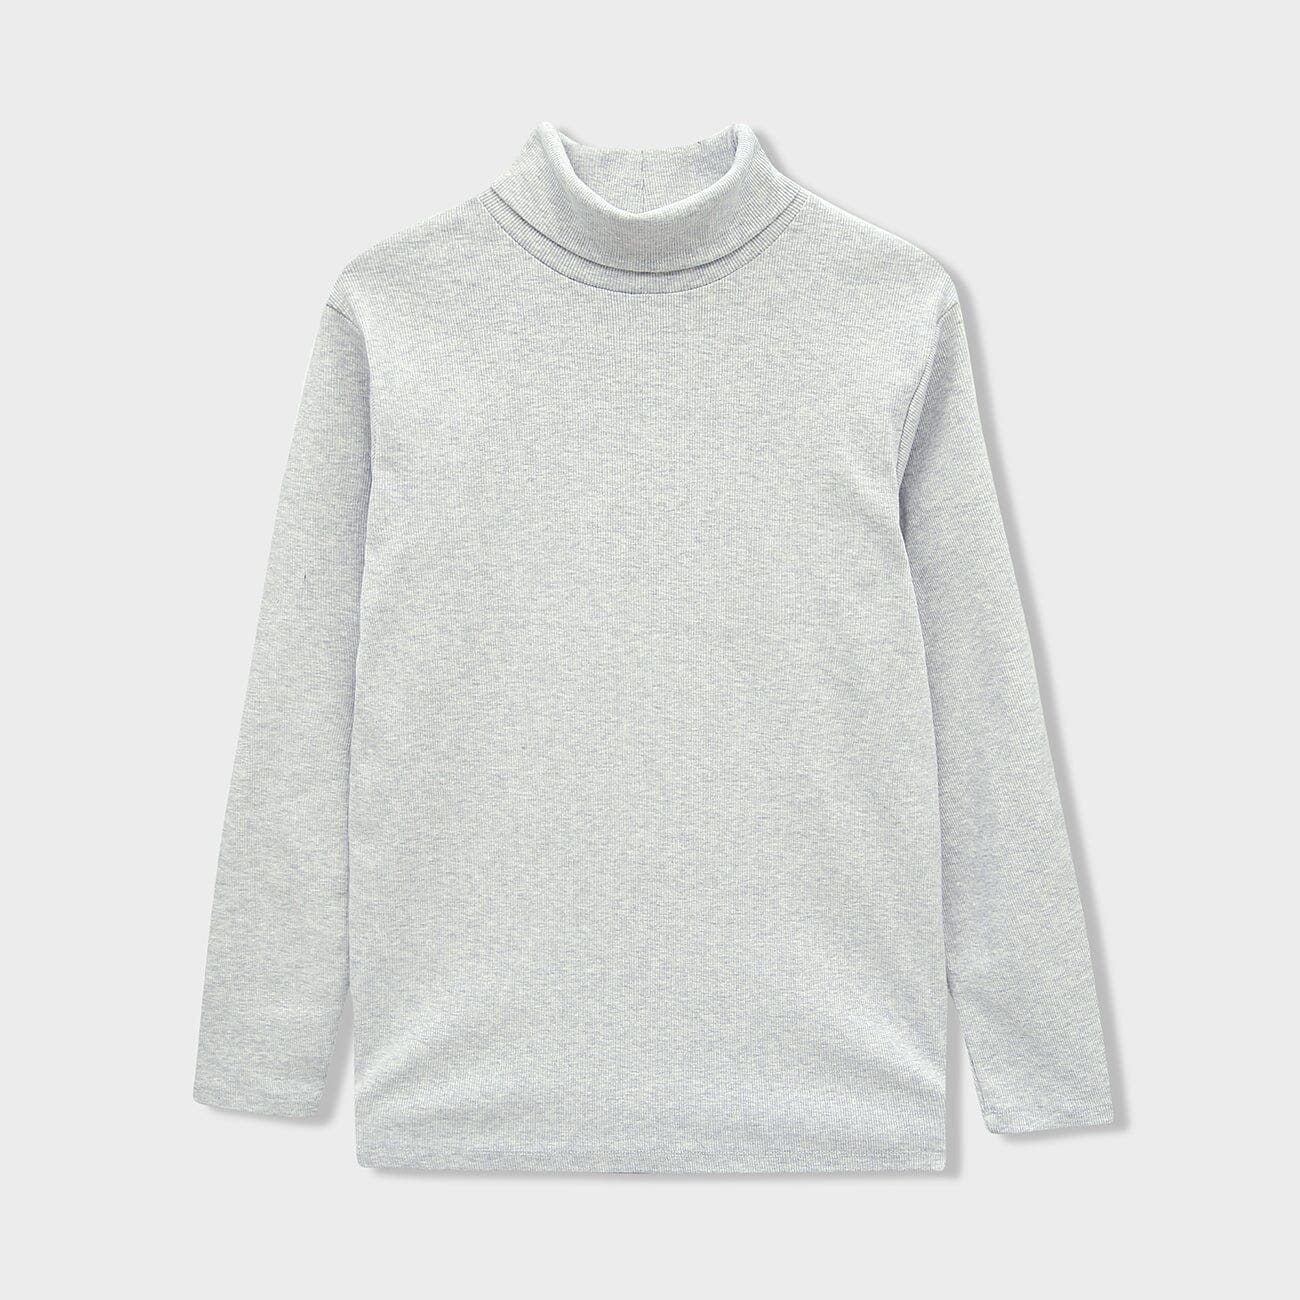 Premium Quality Grey Turtle Neck Sweatshirt For Men (120159)